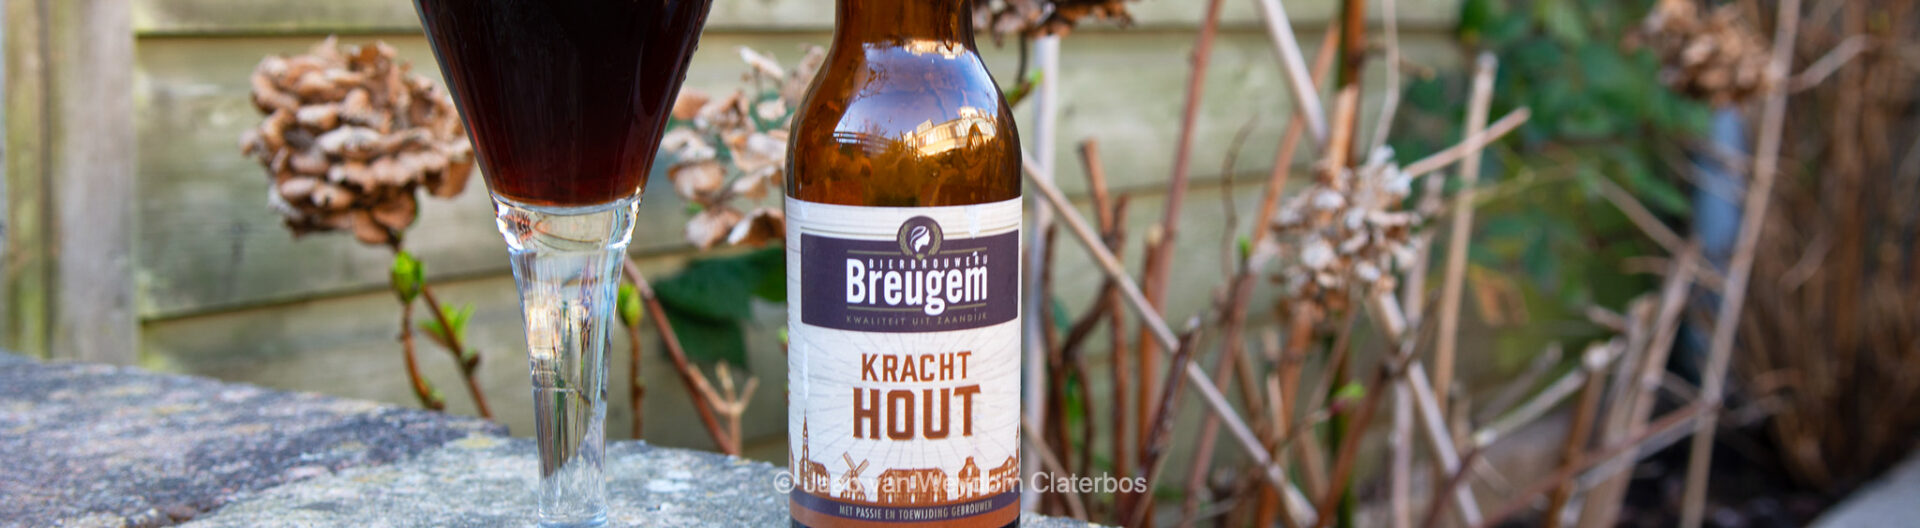 Bierbrouwerij Breugem - Kracht Hout